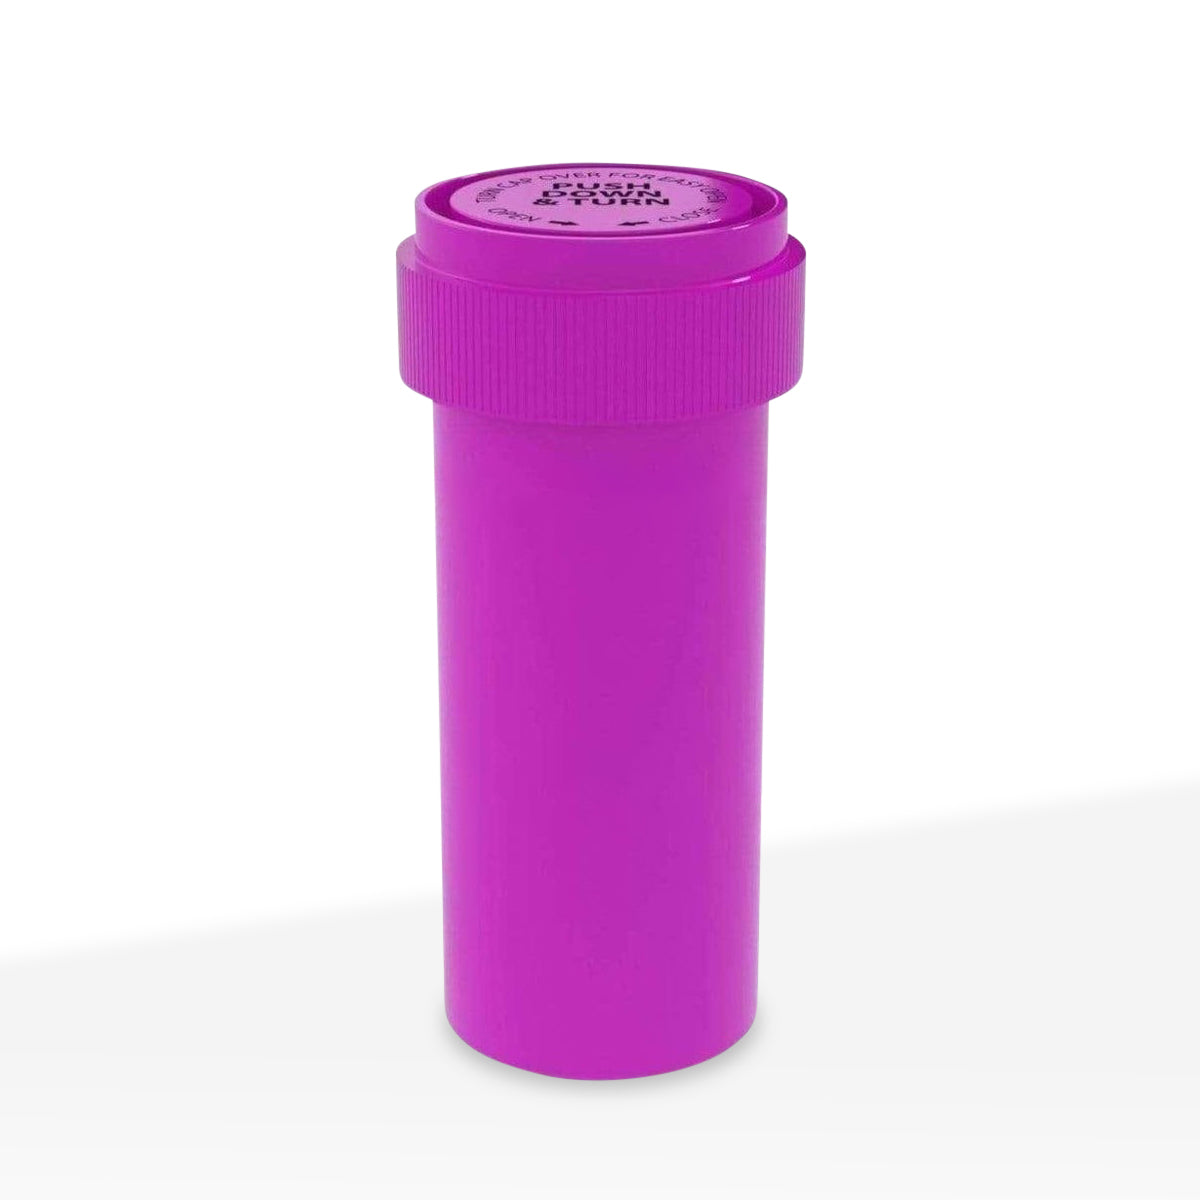 Child Resistant | Opaque Pink Reversible Cap Vials | 16 Dram - 3 Grams - 230 Count